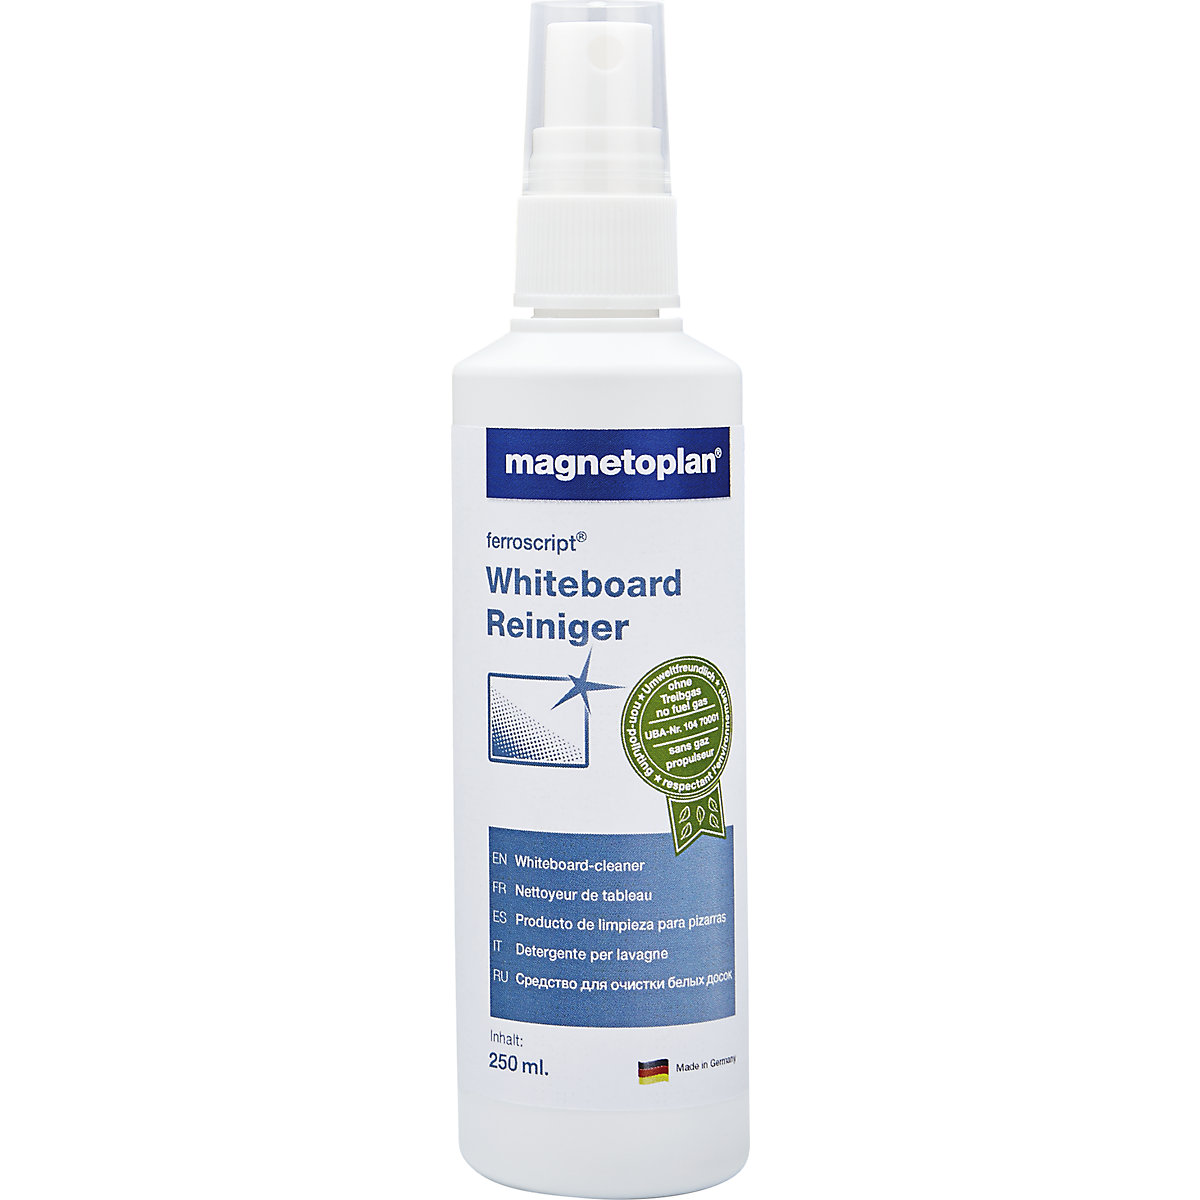 ferroscript® whiteboard cleaner - magnetoplan